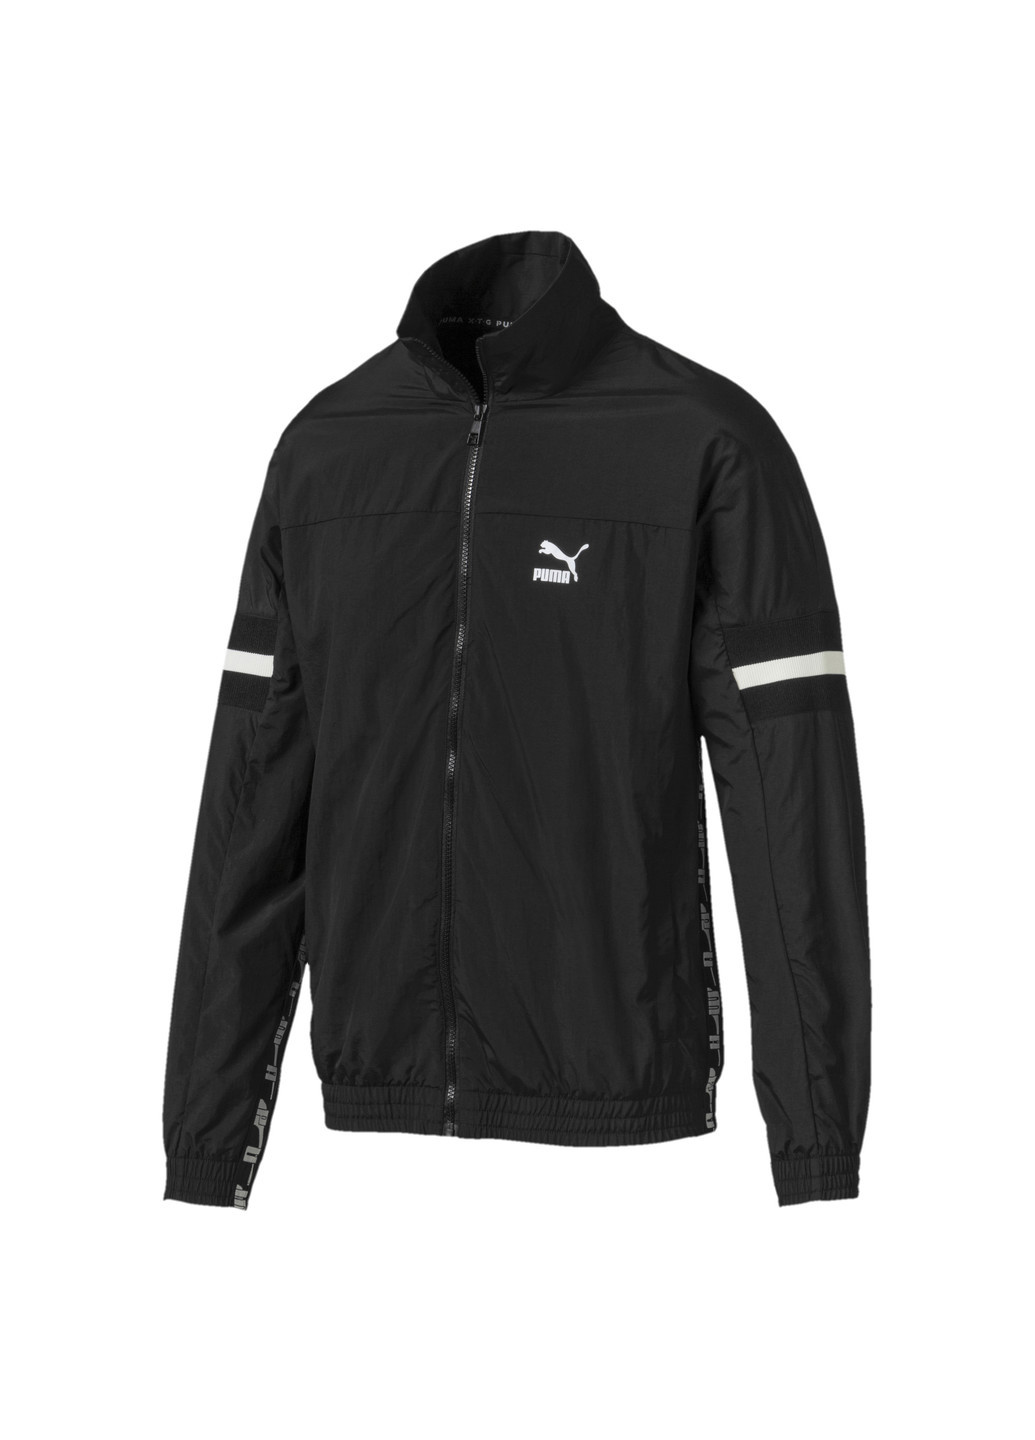 Олимпийка Puma XTG Woven Jacket чёрная спортивная